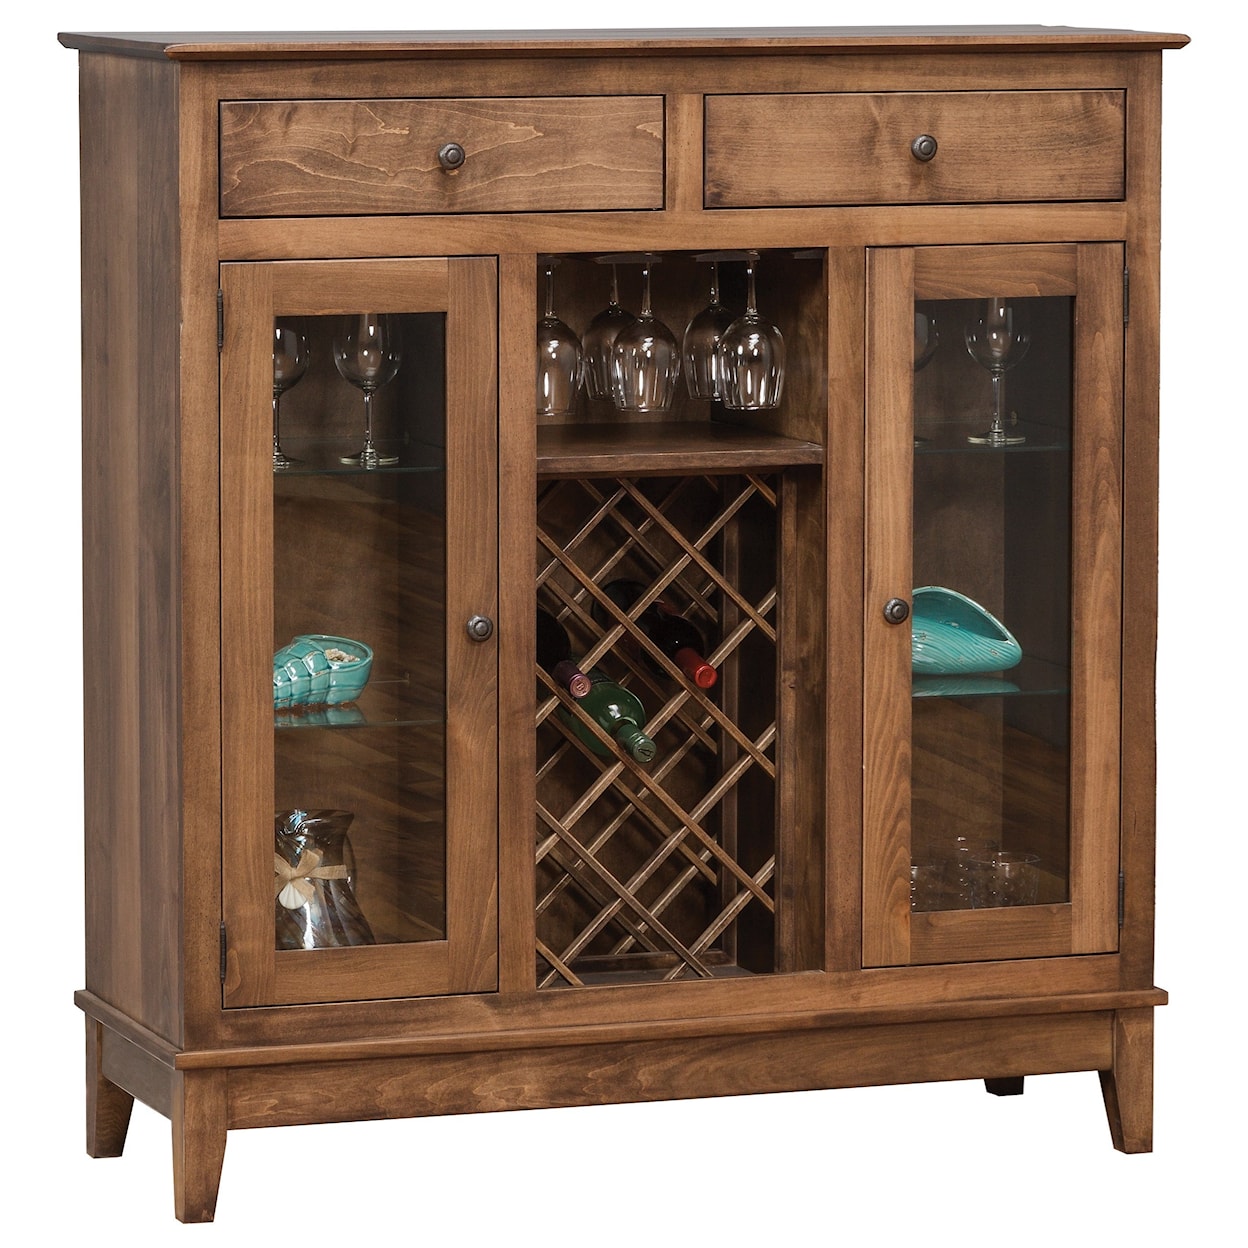 Daniel's Amish Dining Storage Shaker Wine Cabinet